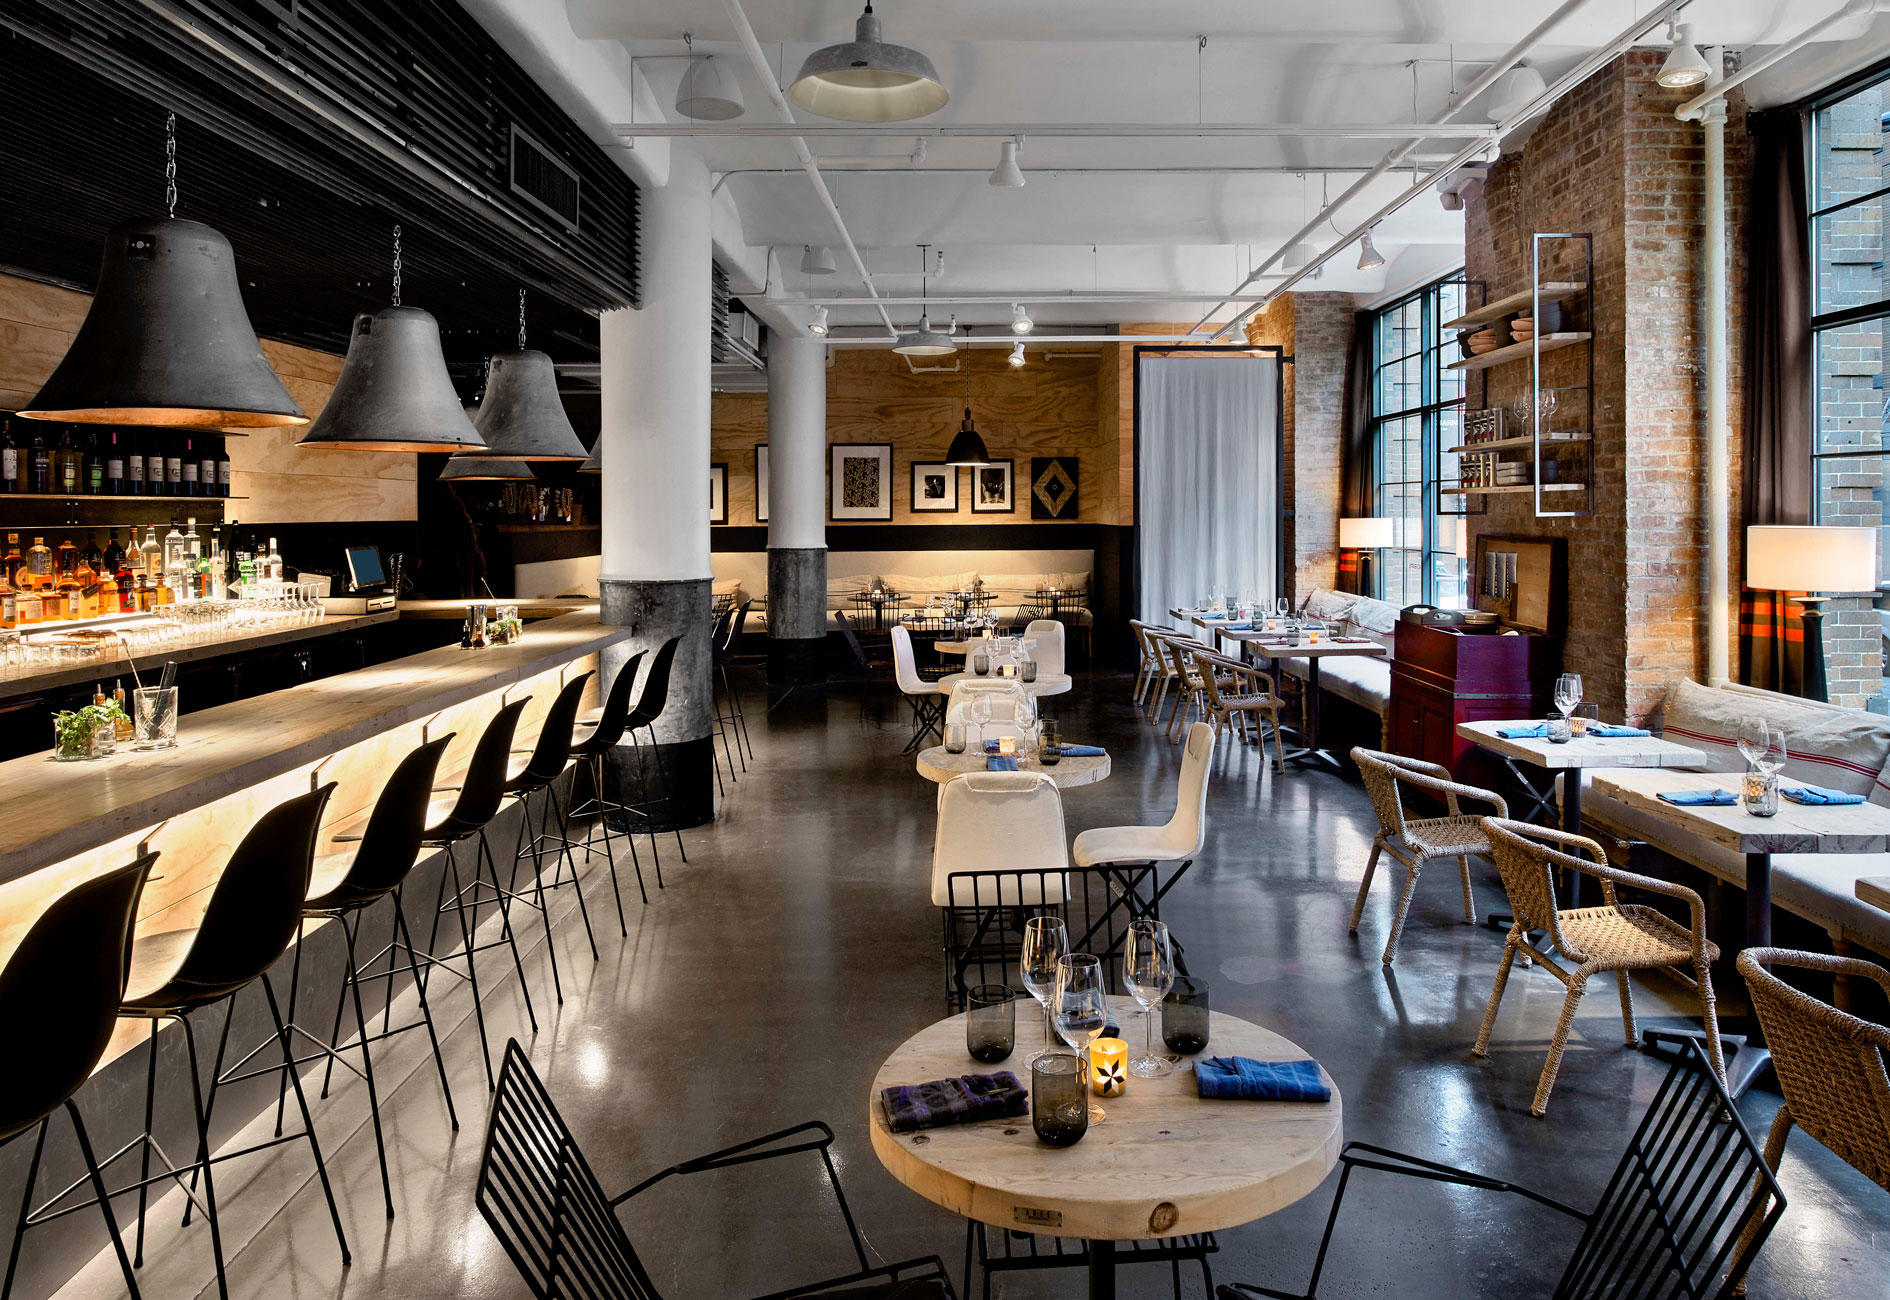 Blackbarn Café & Bar designed by MARKZEFF